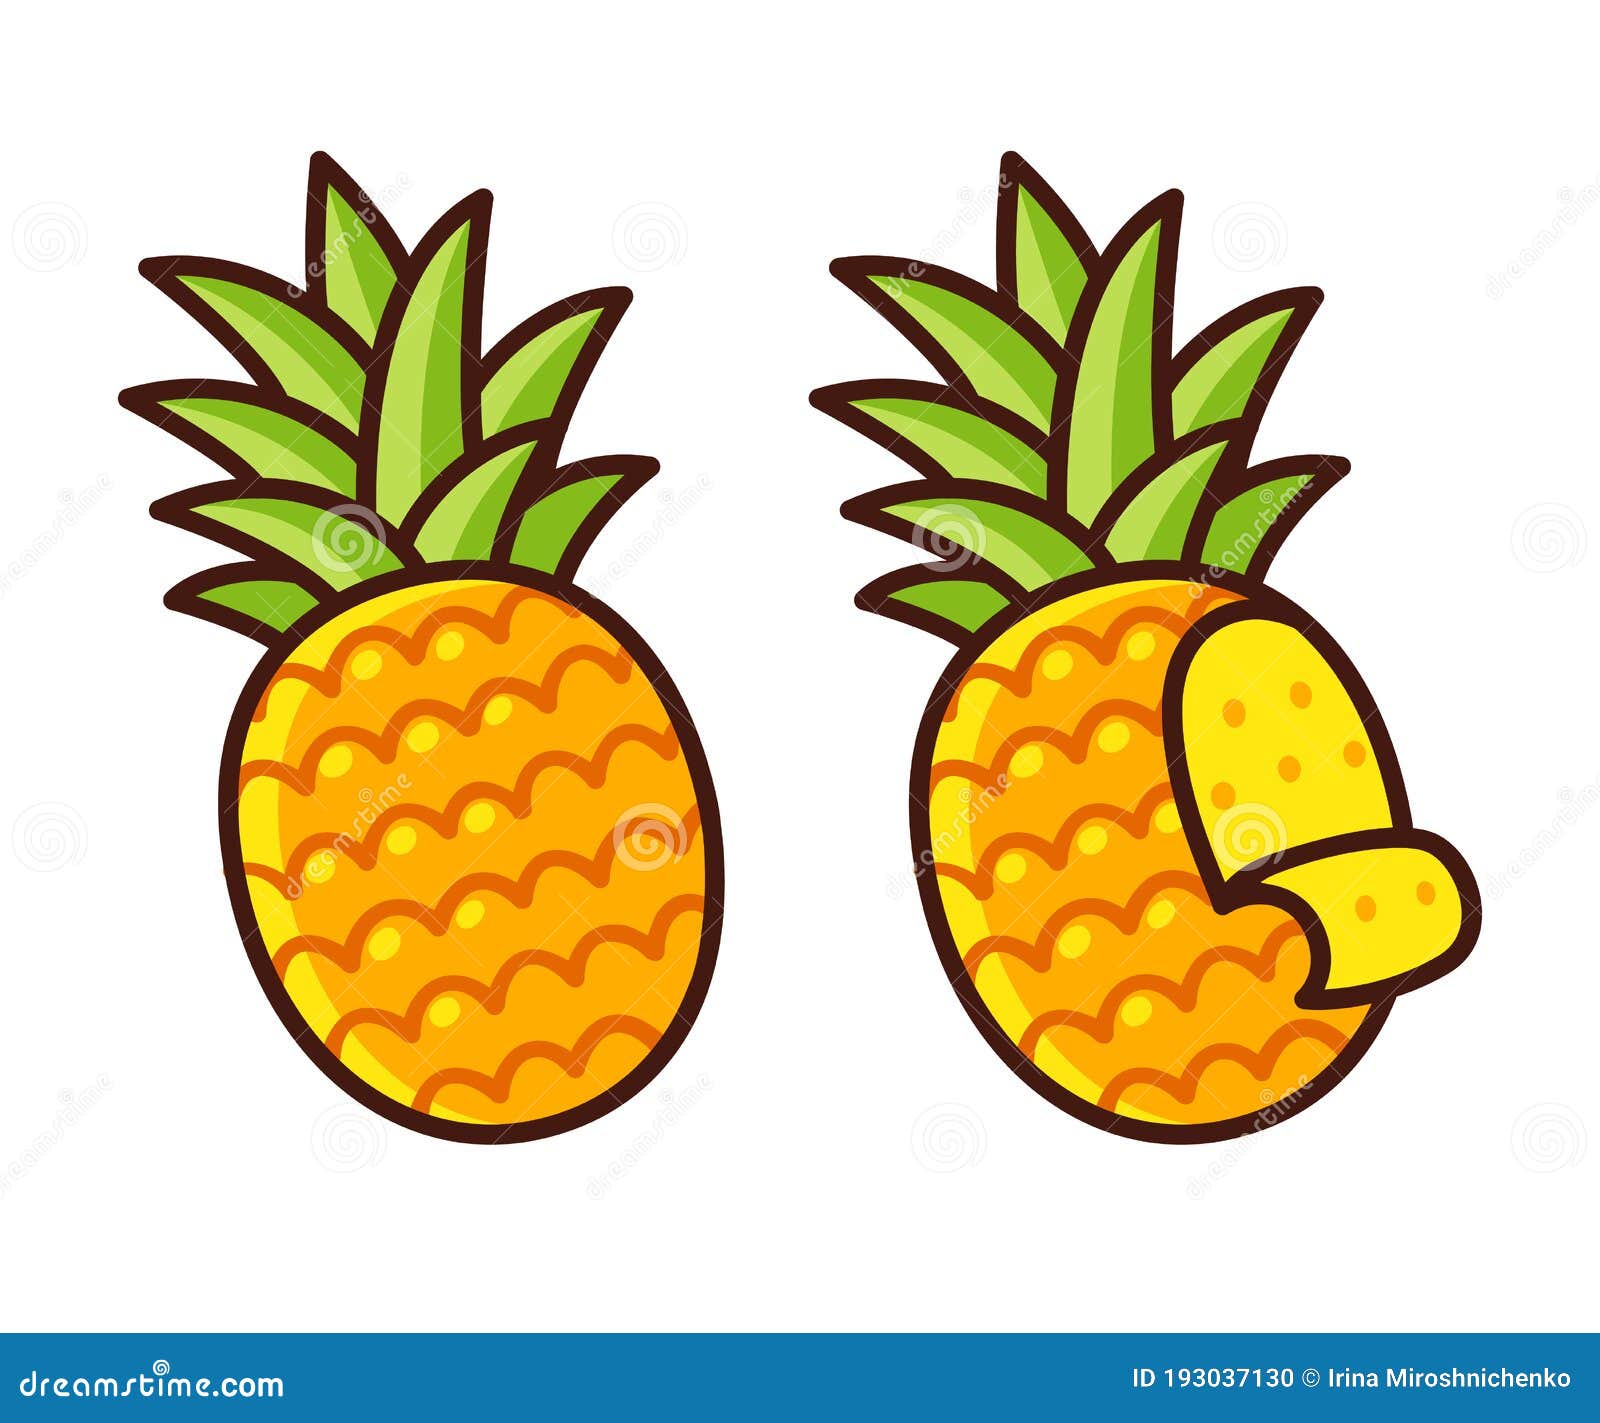 Cartoon Cute Pineapple Drawing Easy Drawings Doodle Colorful.